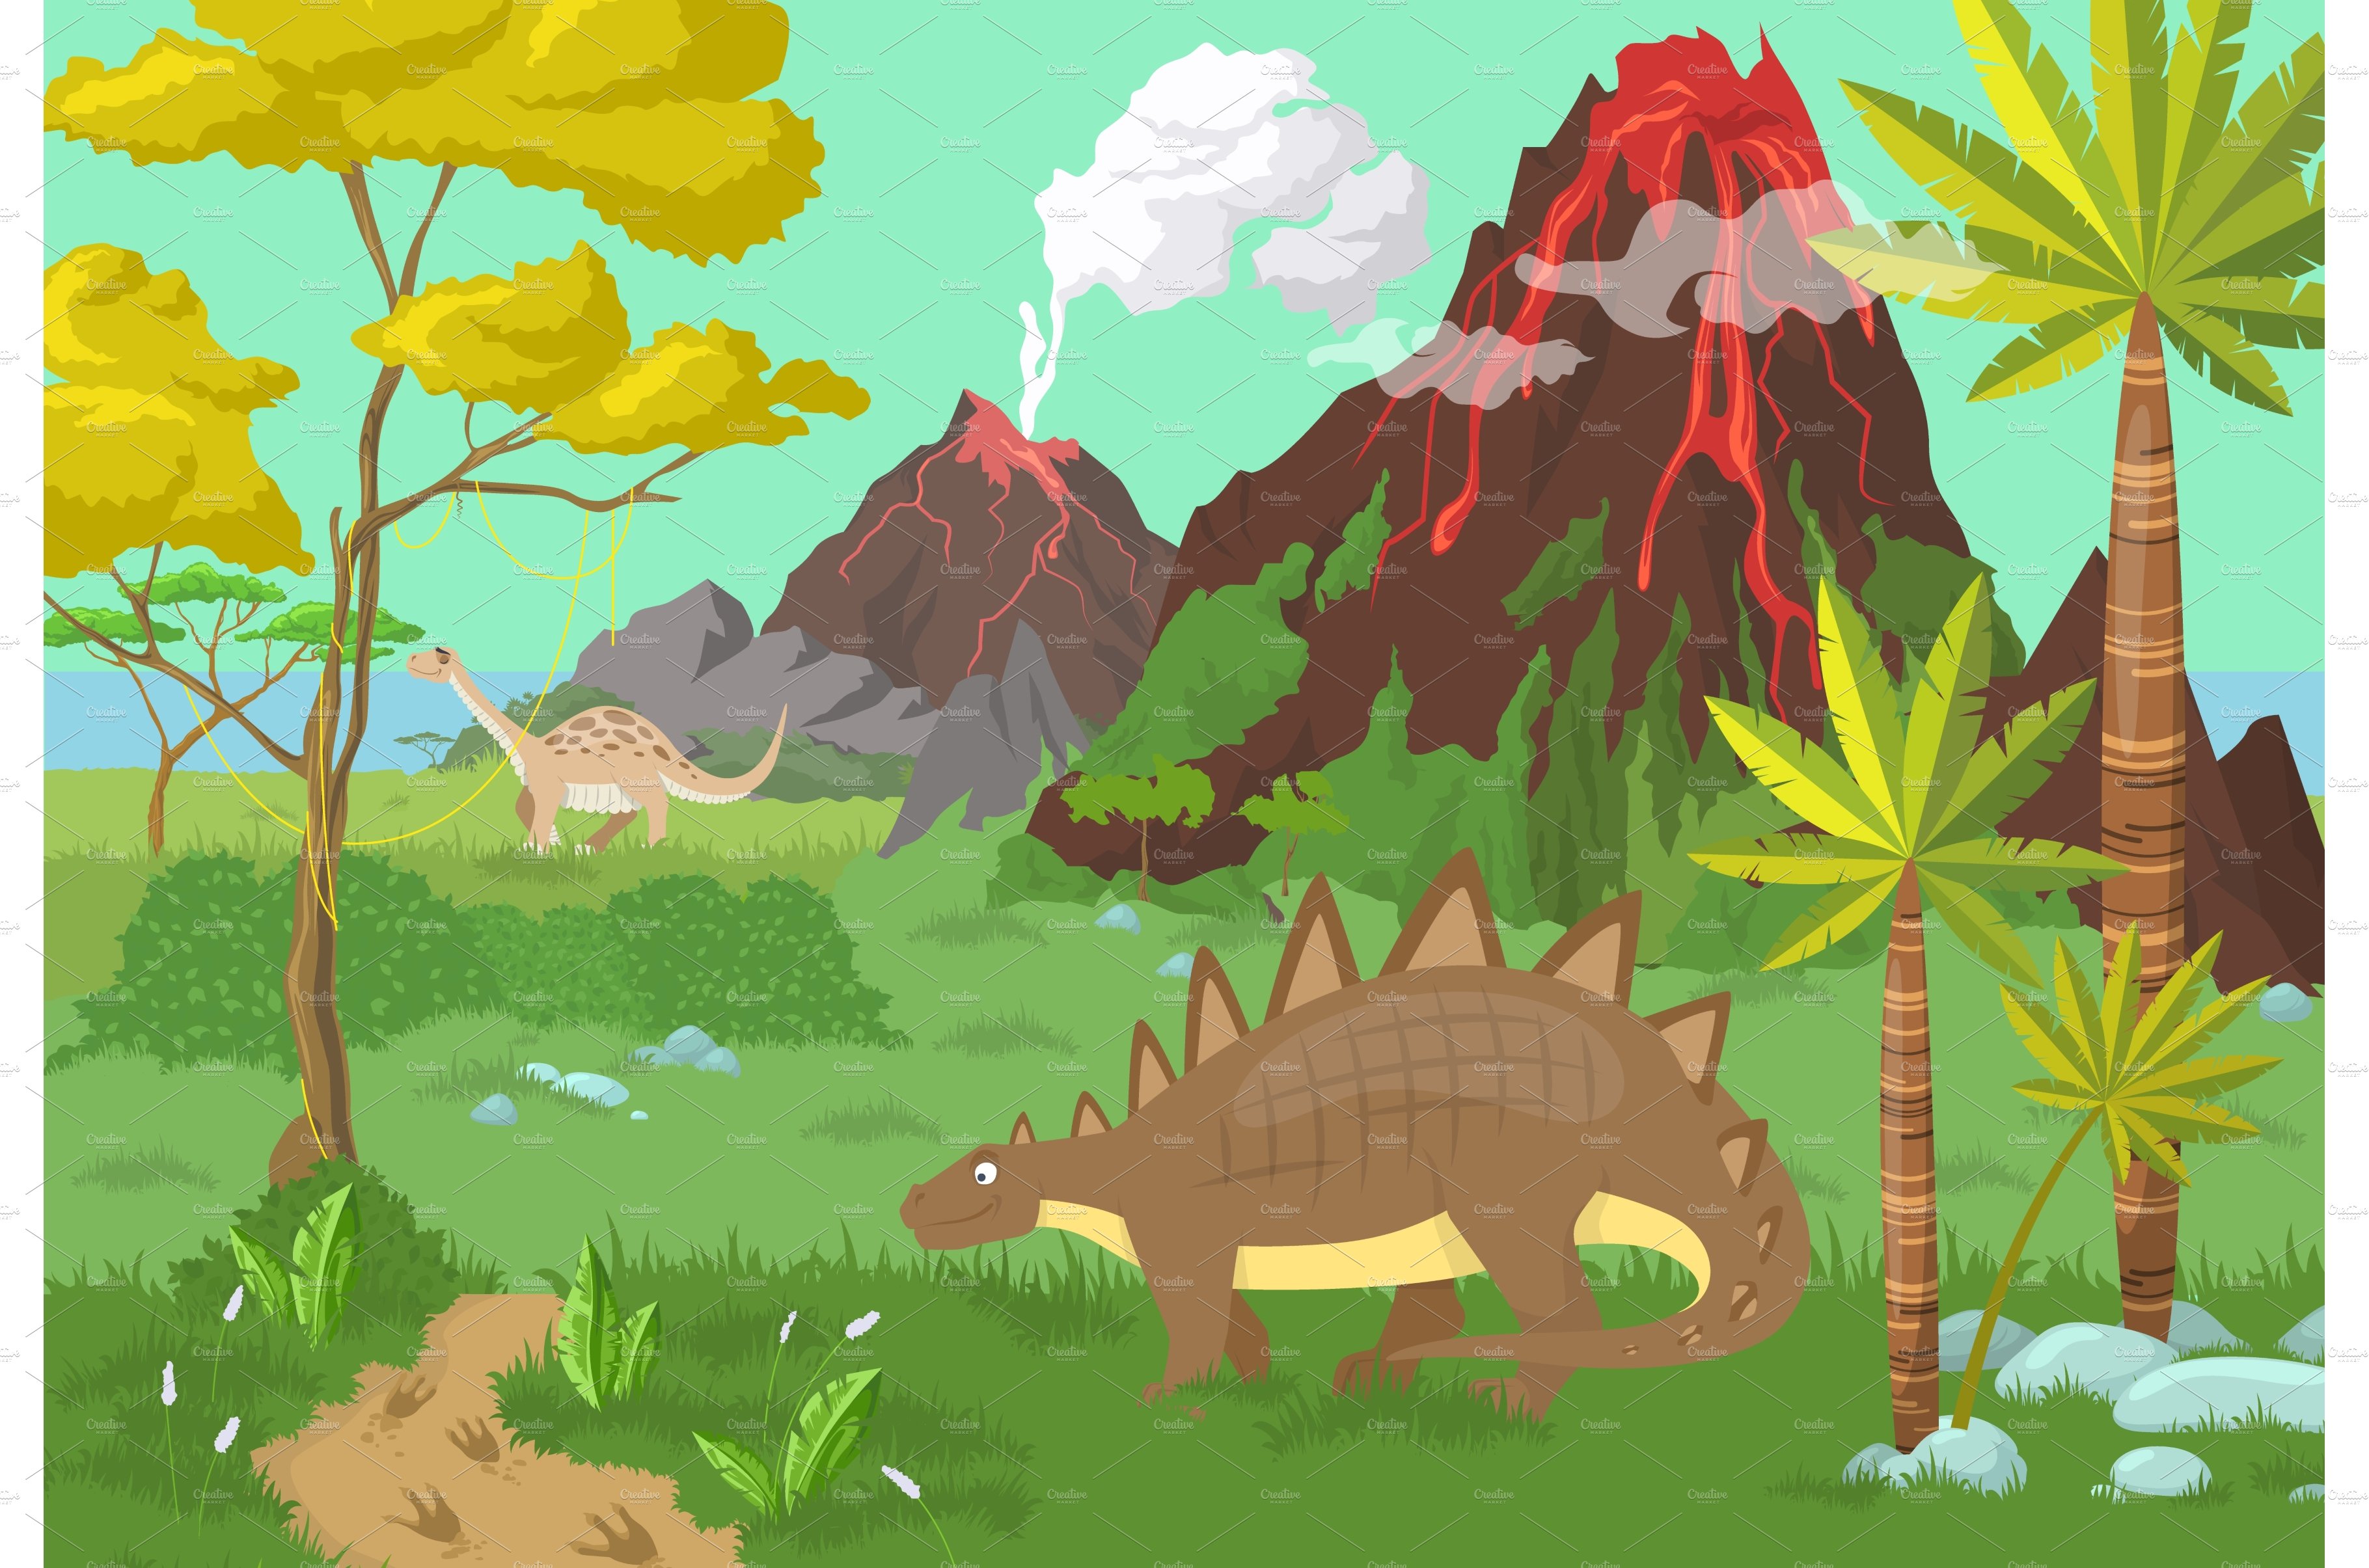 Prehistoric era scene with dinosaurs cover image.